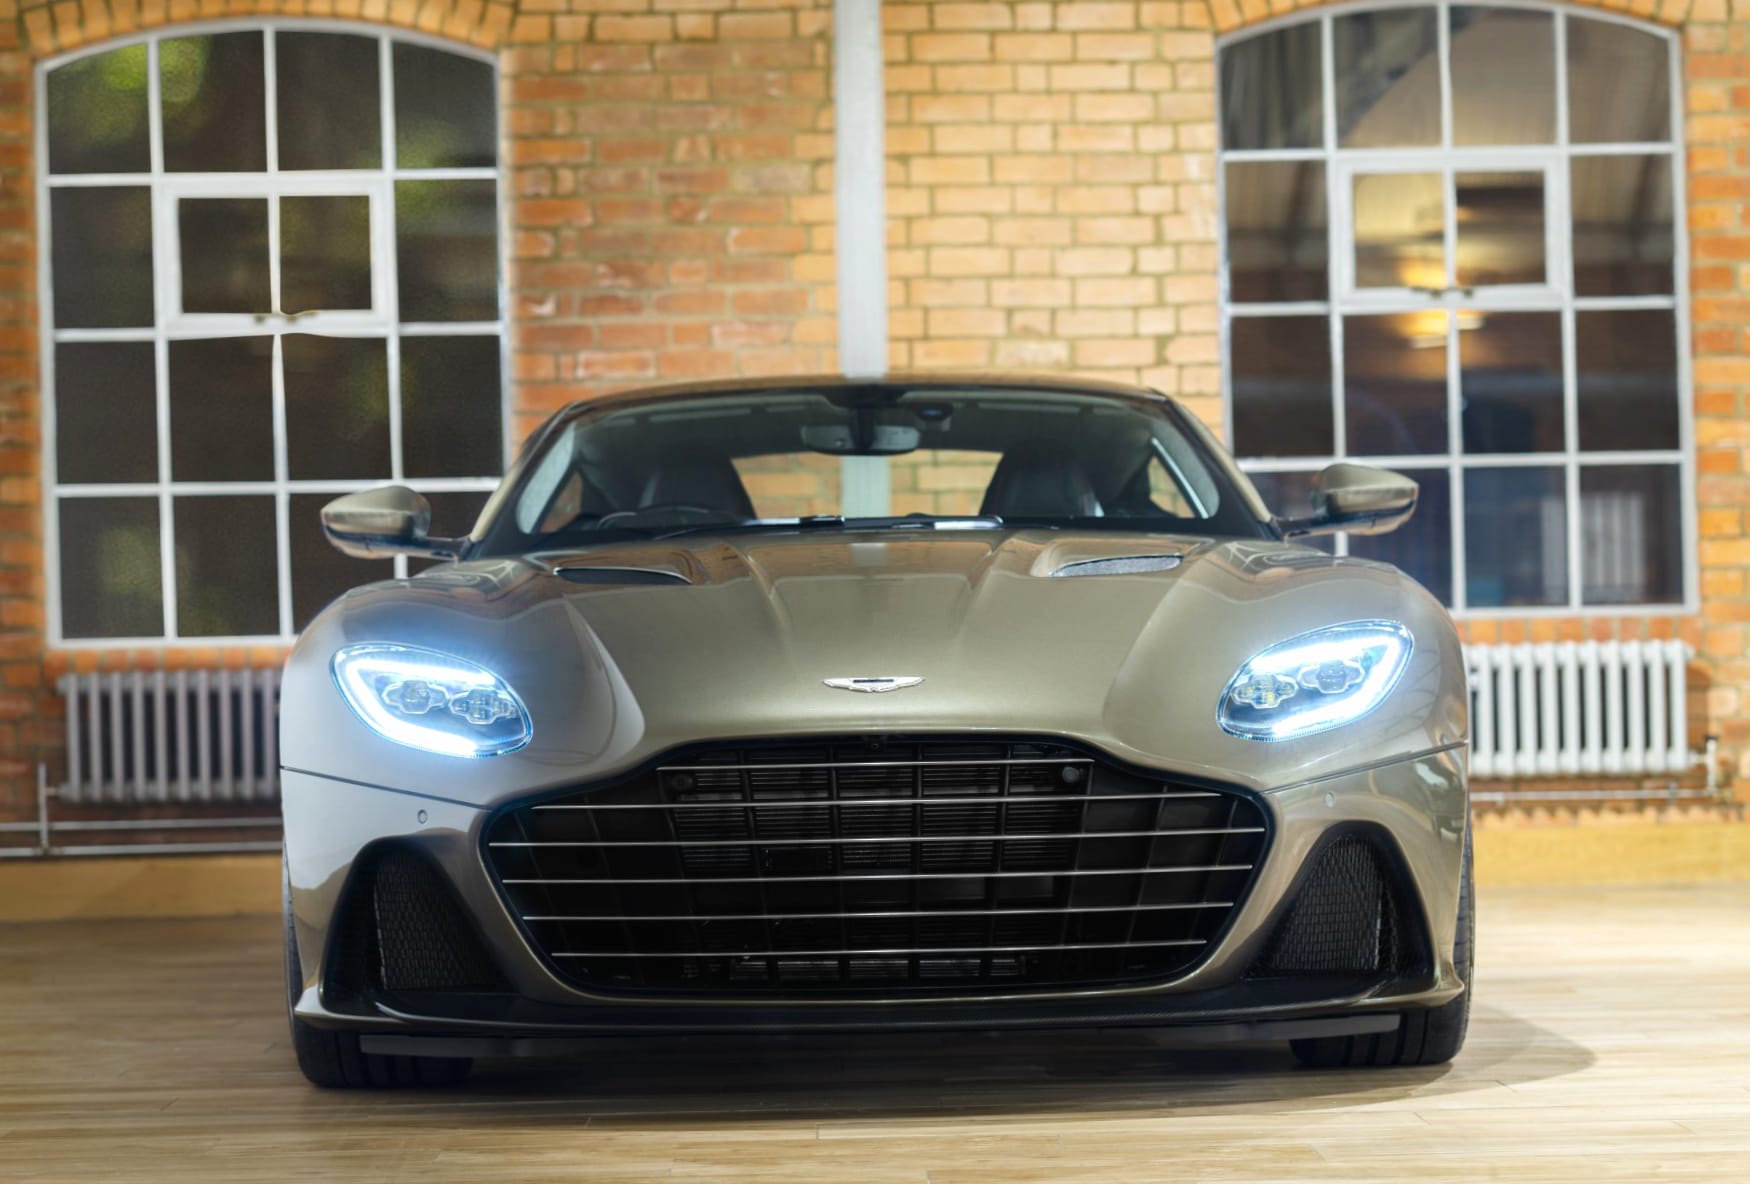 Aston Martin DBS Superleggera at 1280 x 960 size wallpapers HD quality